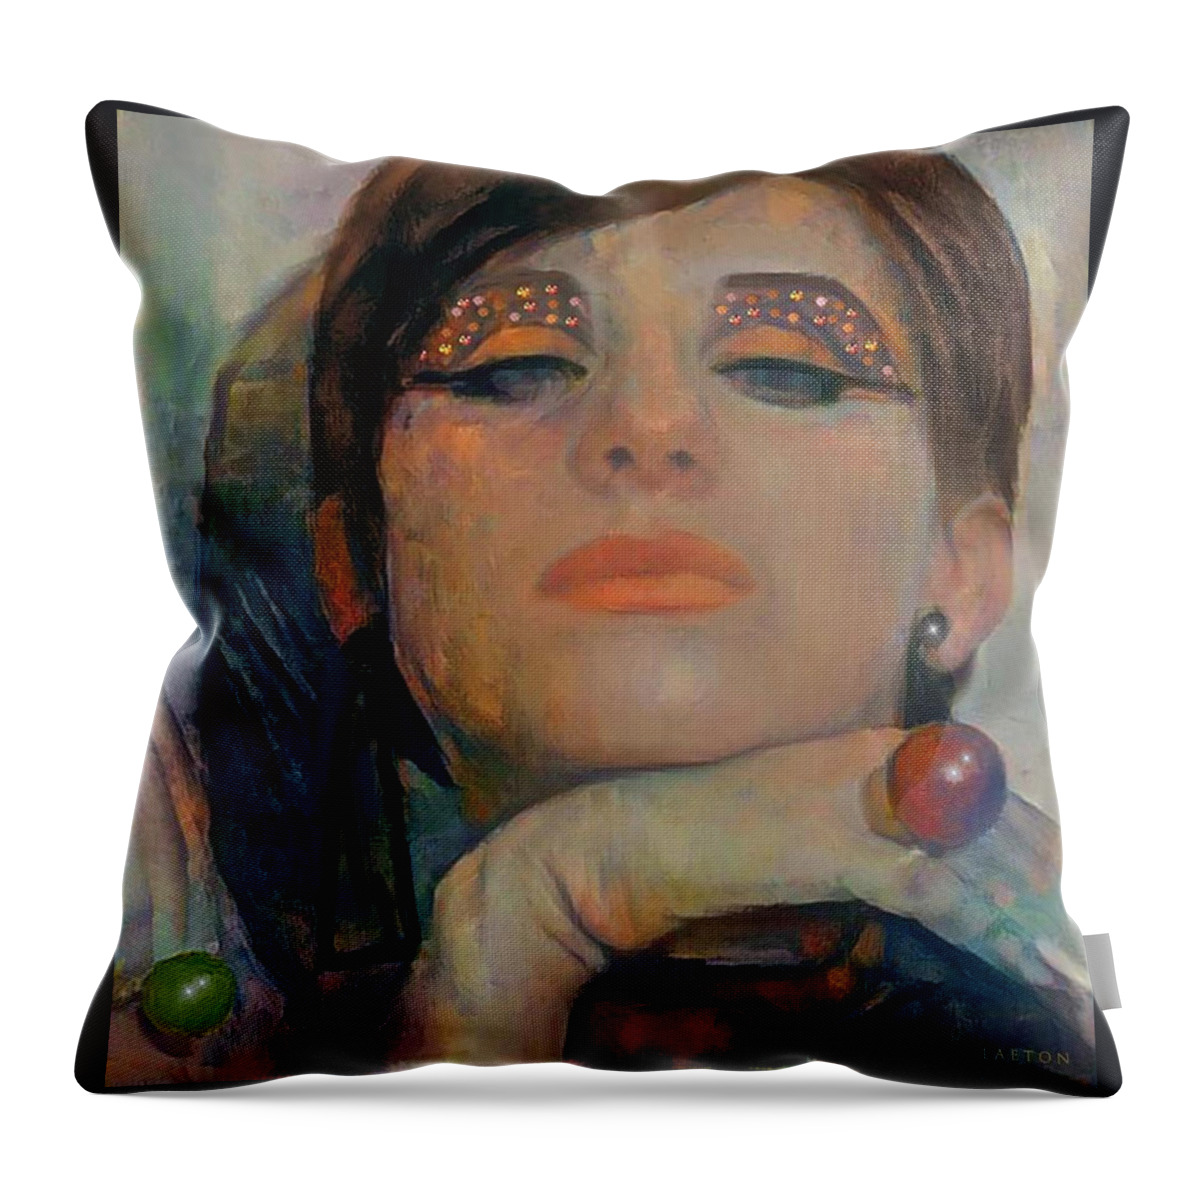  Throw Pillow featuring the digital art Barbra Streisand 14 by Richard Laeton